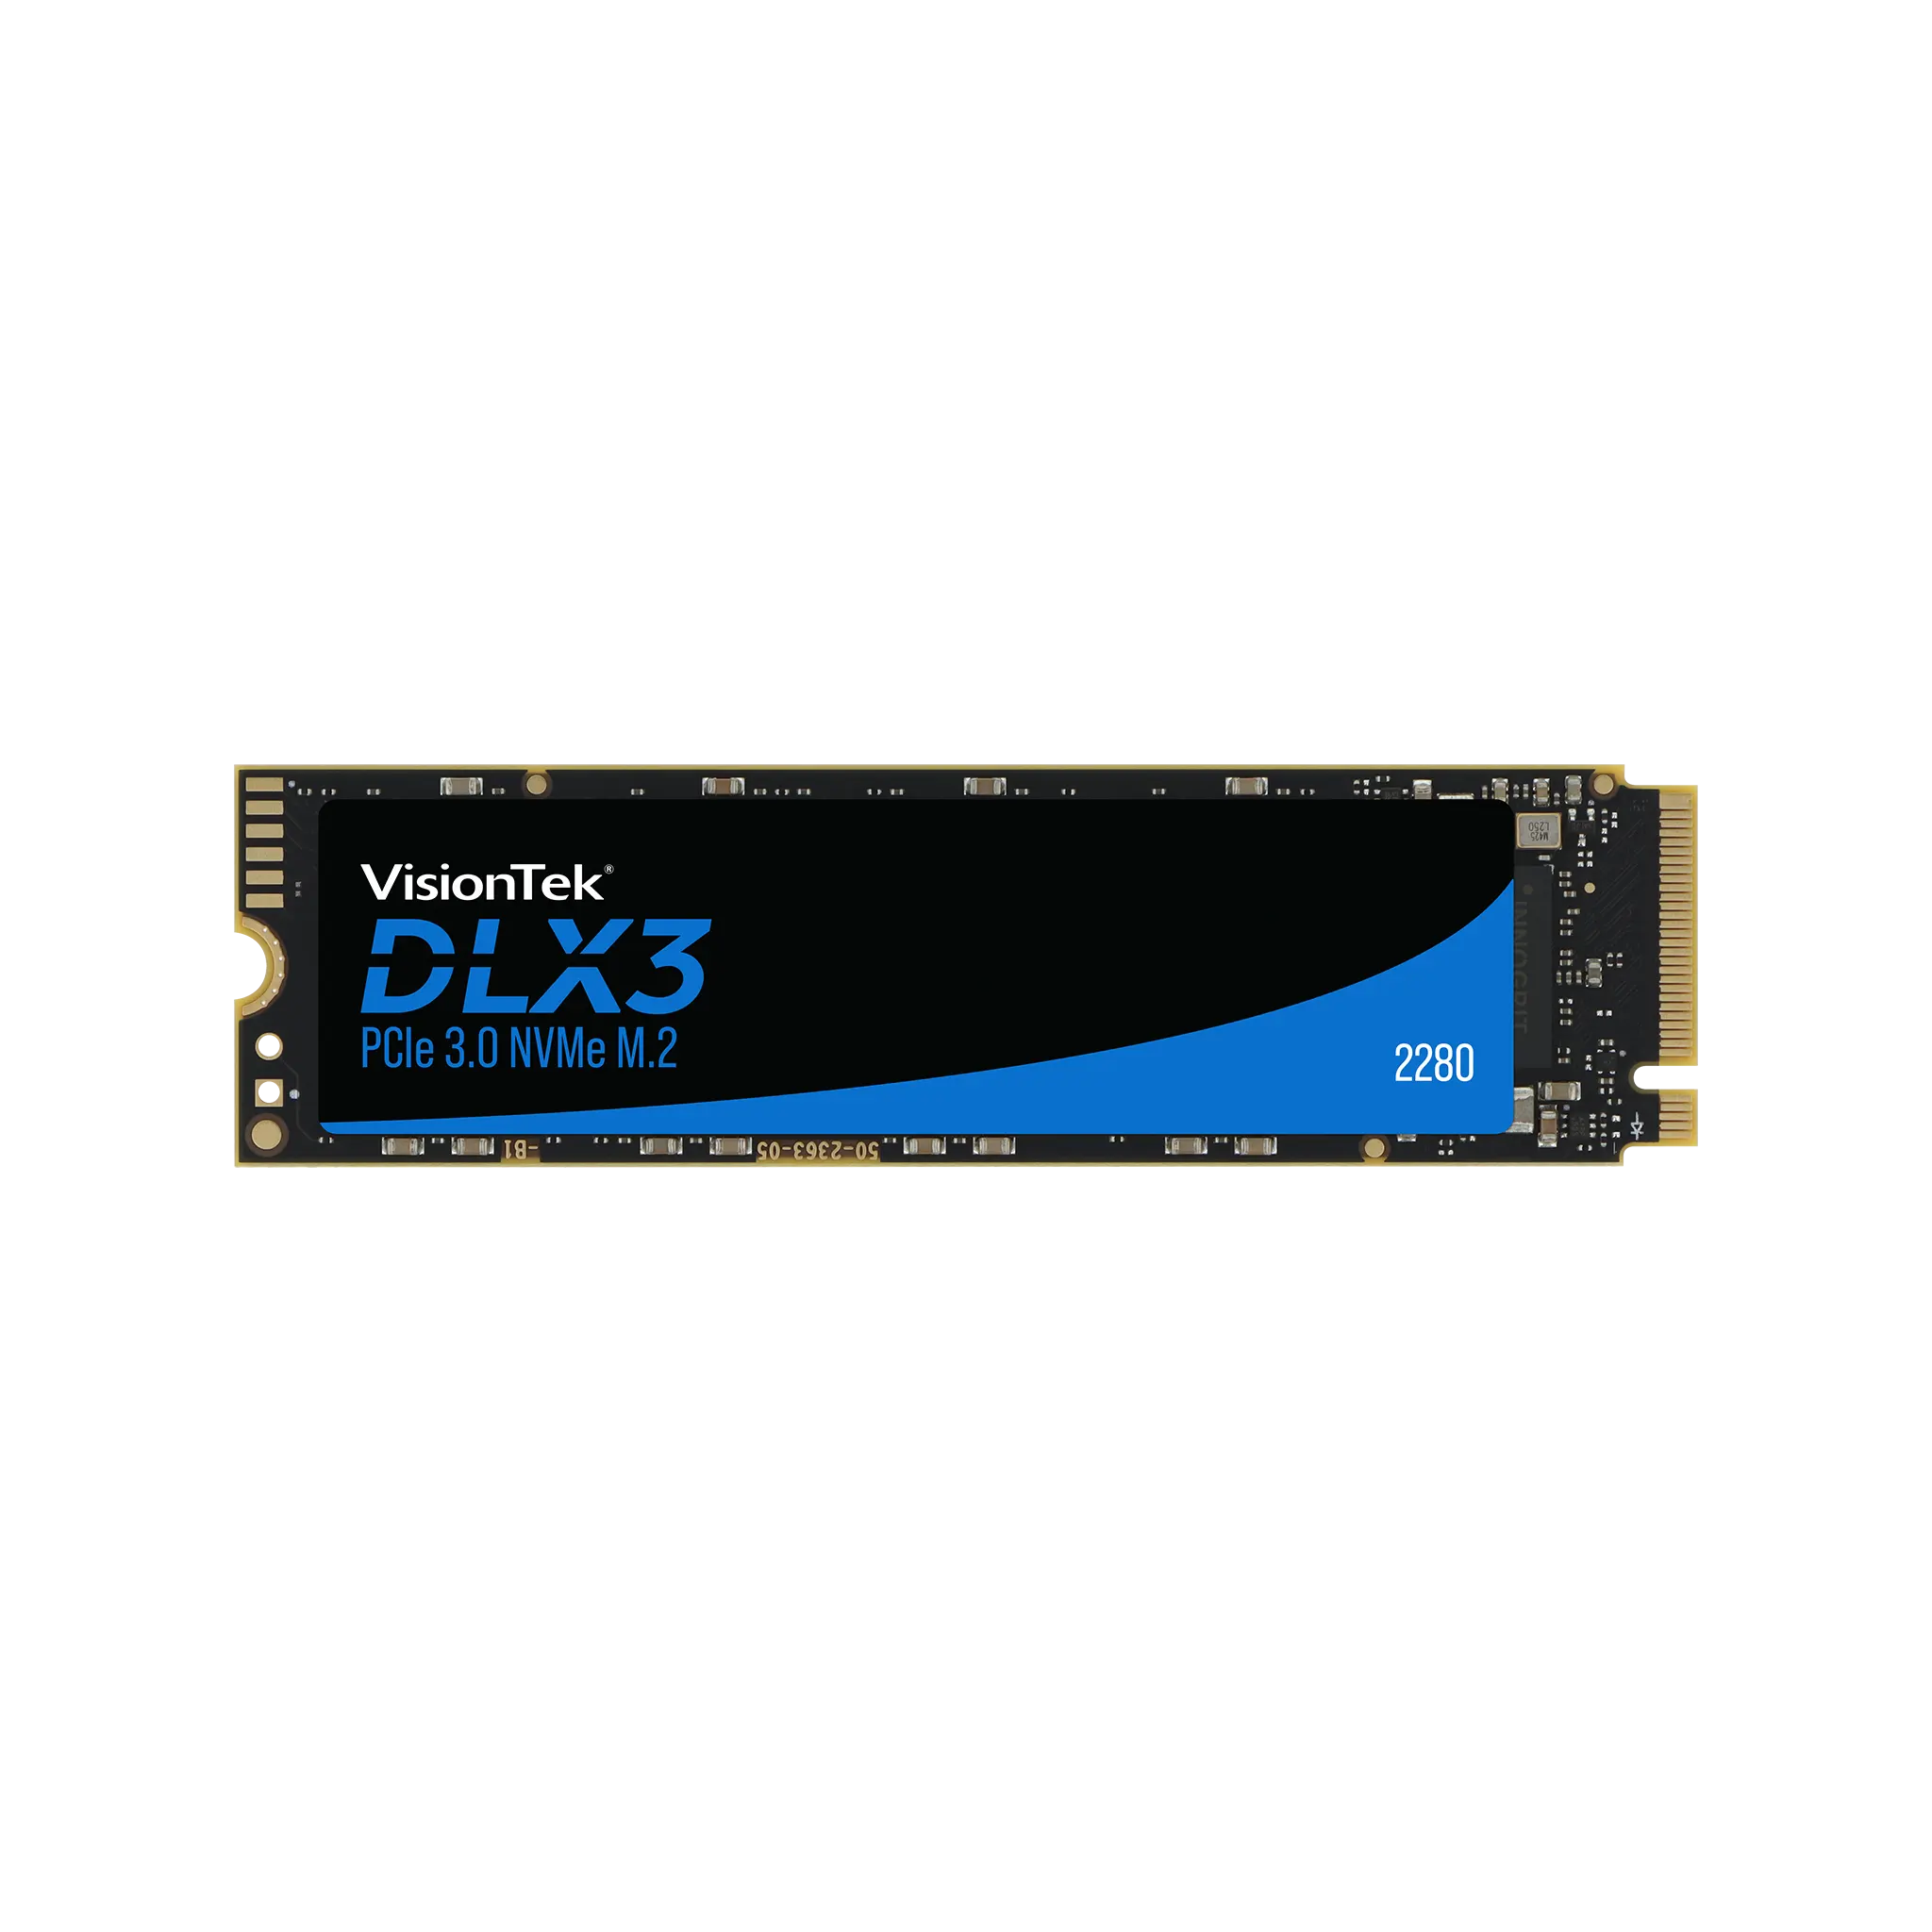 VisionTek DLX3 2280 M.2 PCIe 3.0 x4 SSD (NVMe)